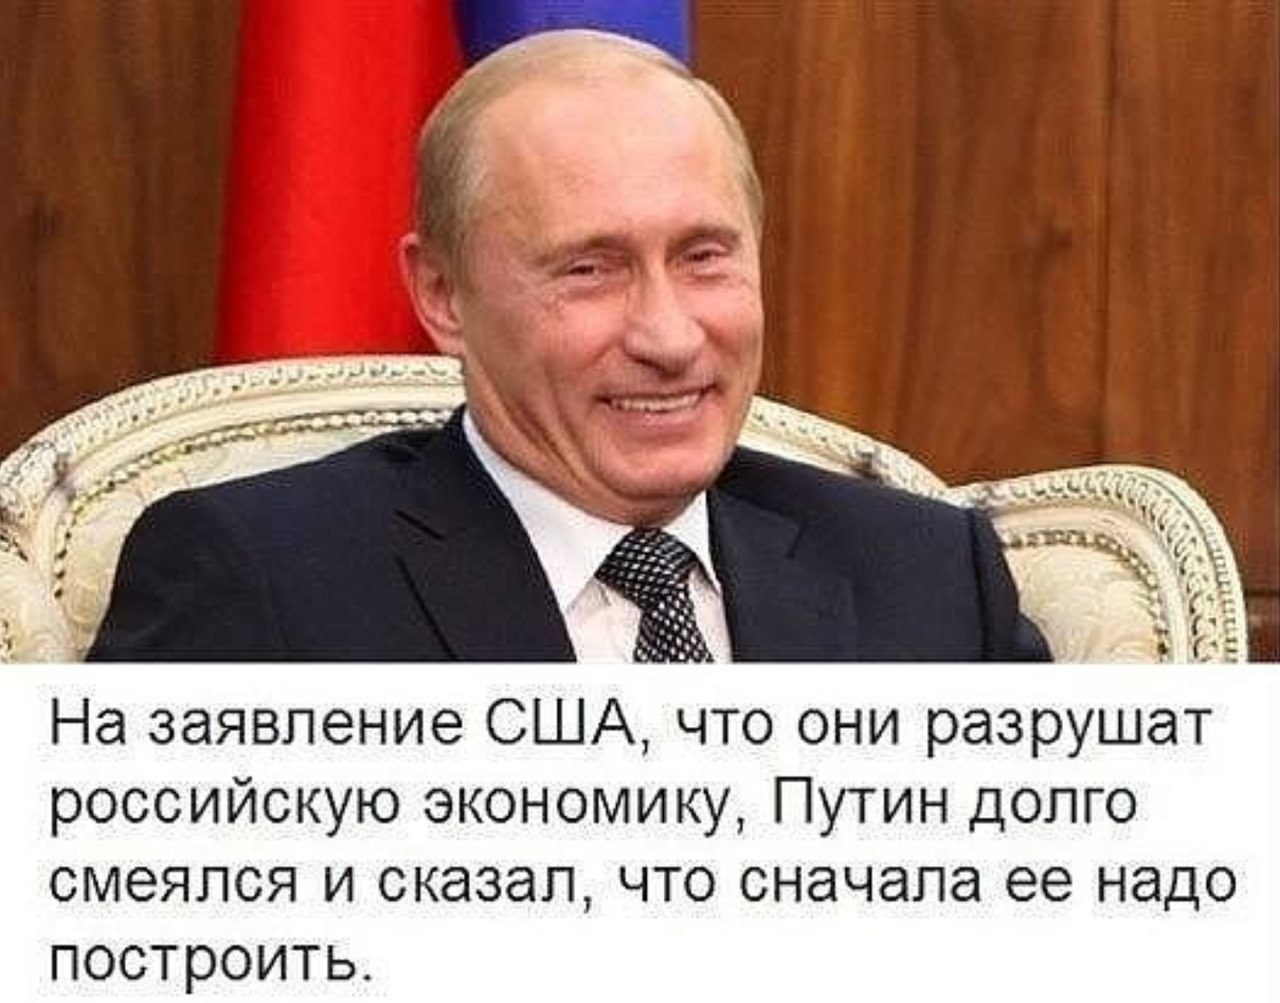 Юмор про Путина в картинках